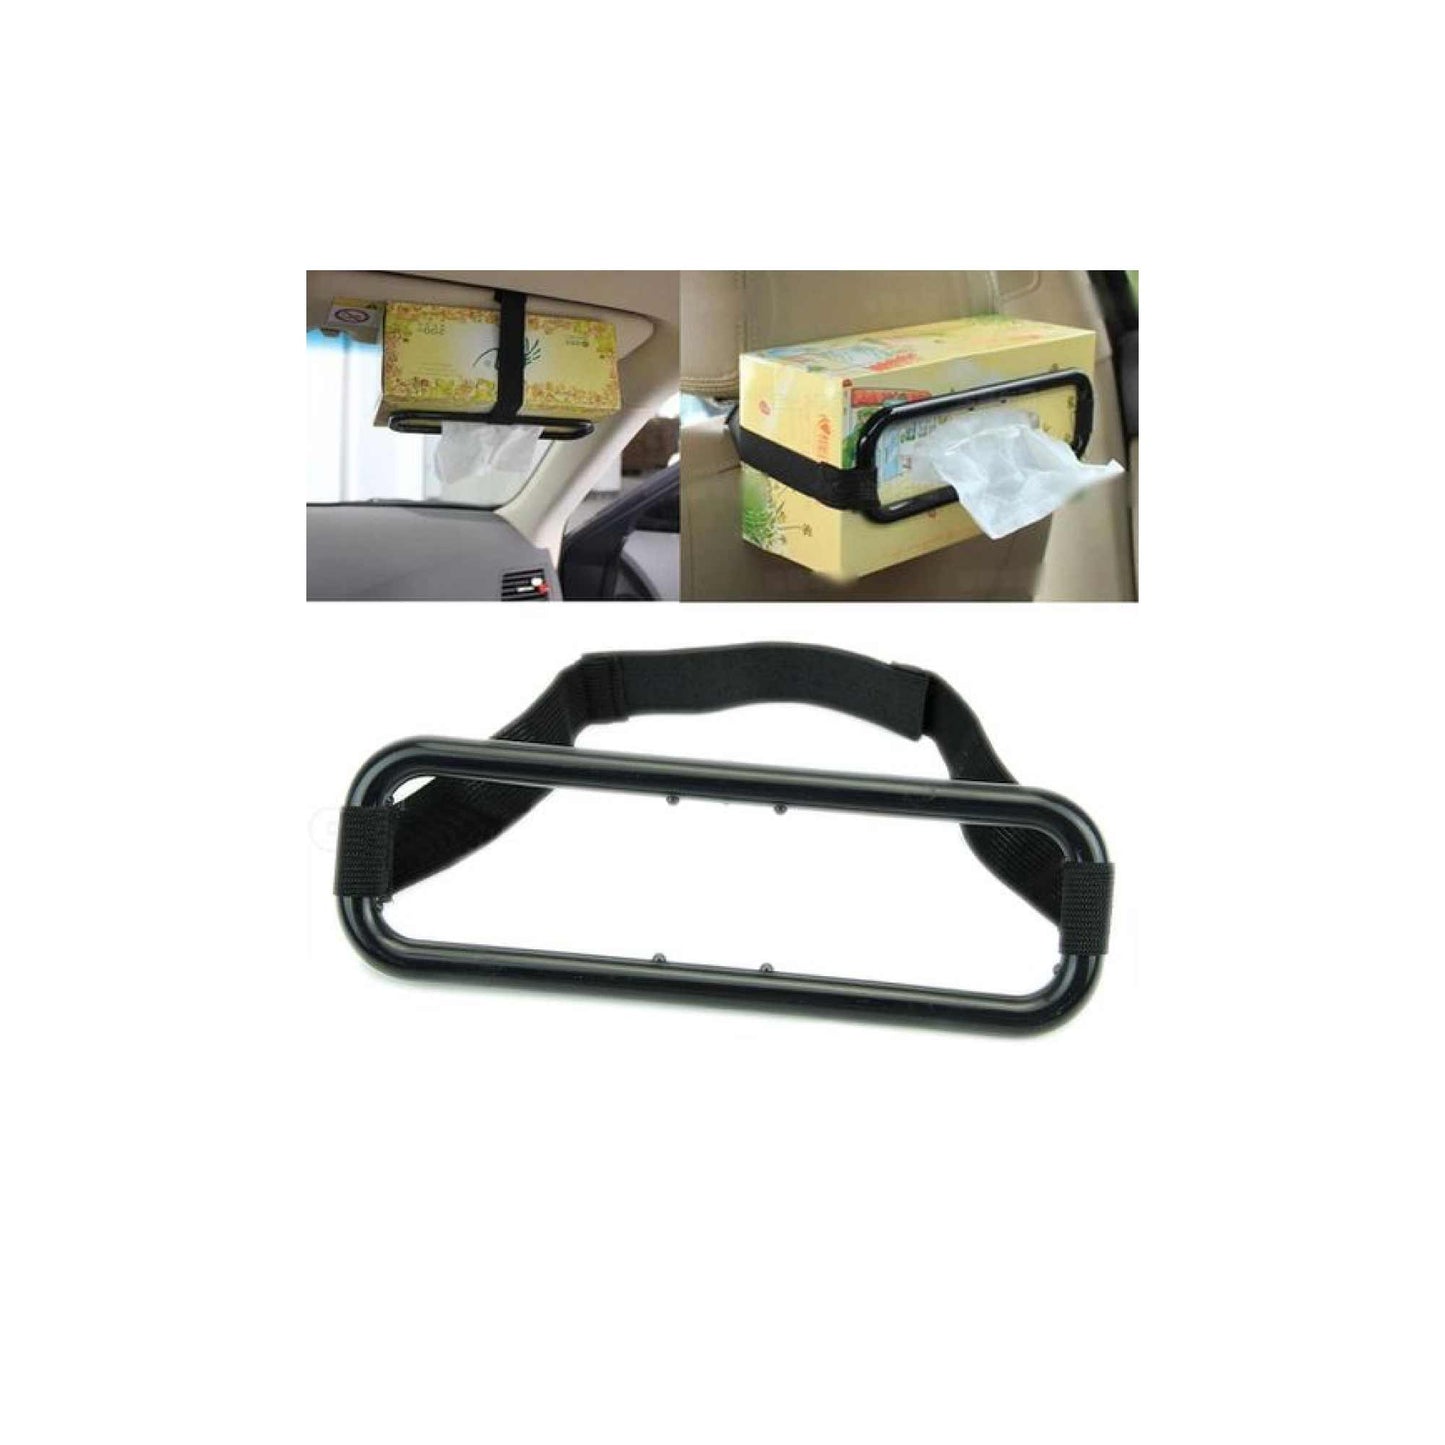 3x Car Tissue Box Holder - Plastic and Elastic Napkin Hanging Organiser Device